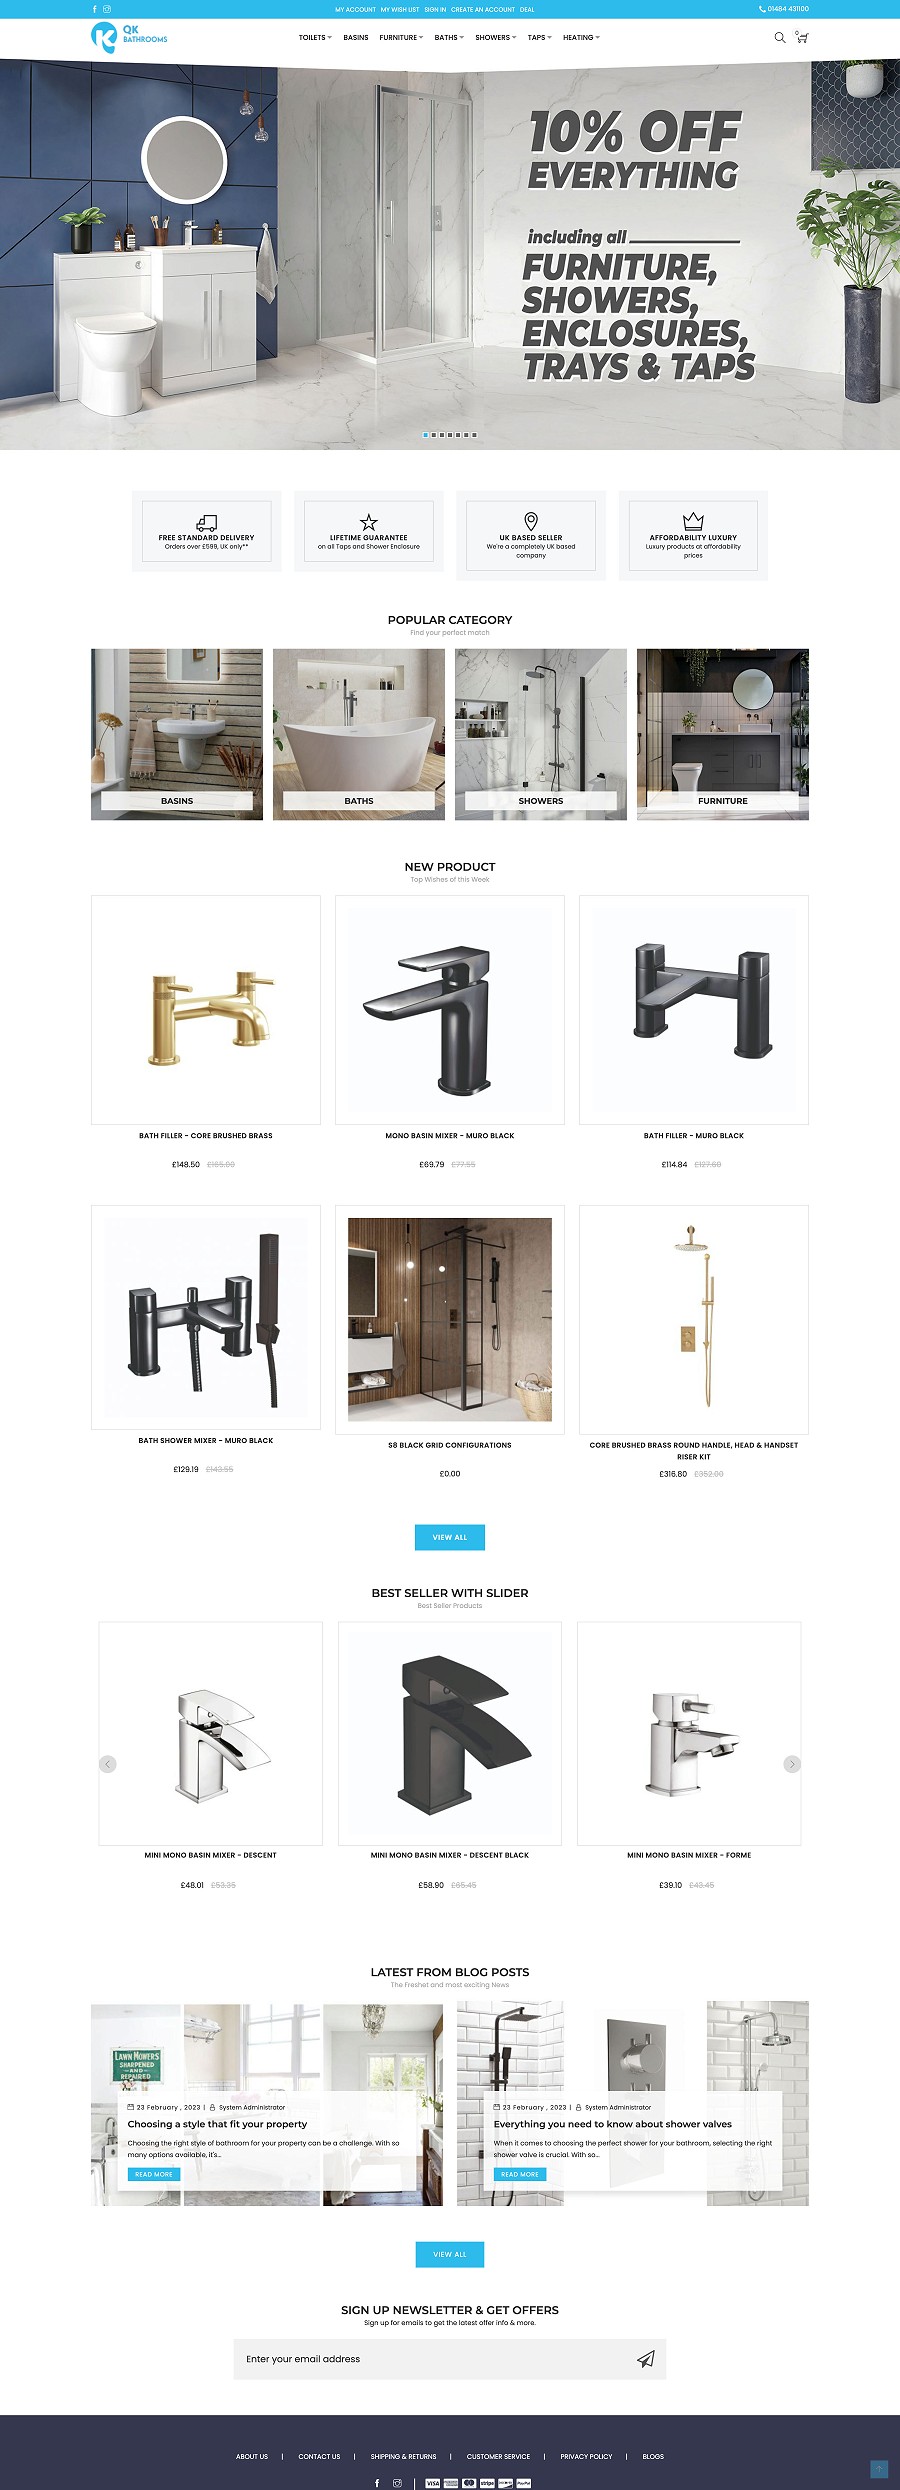 QK Bathrooms Home Page